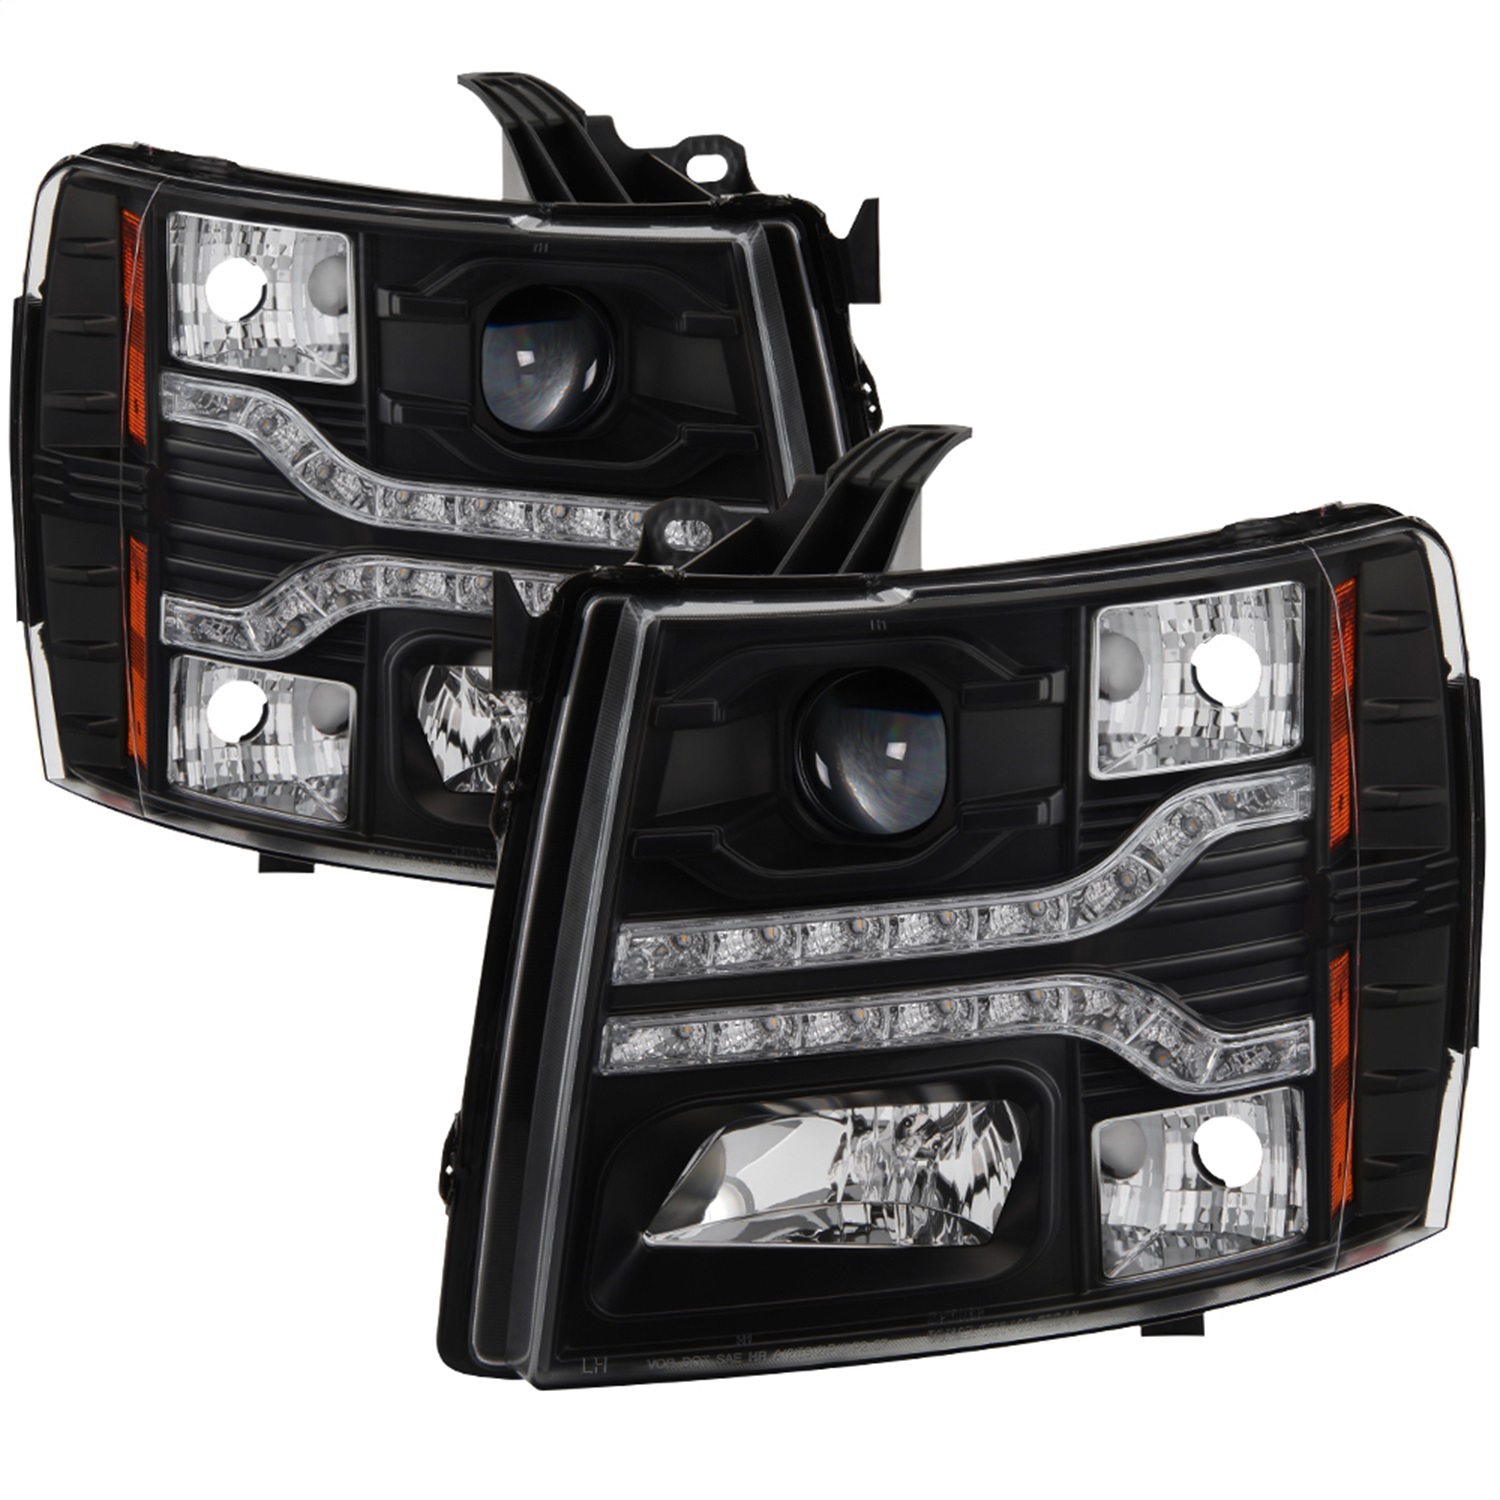 Spyder Auto 5083524 DRL LED Projector Headlights